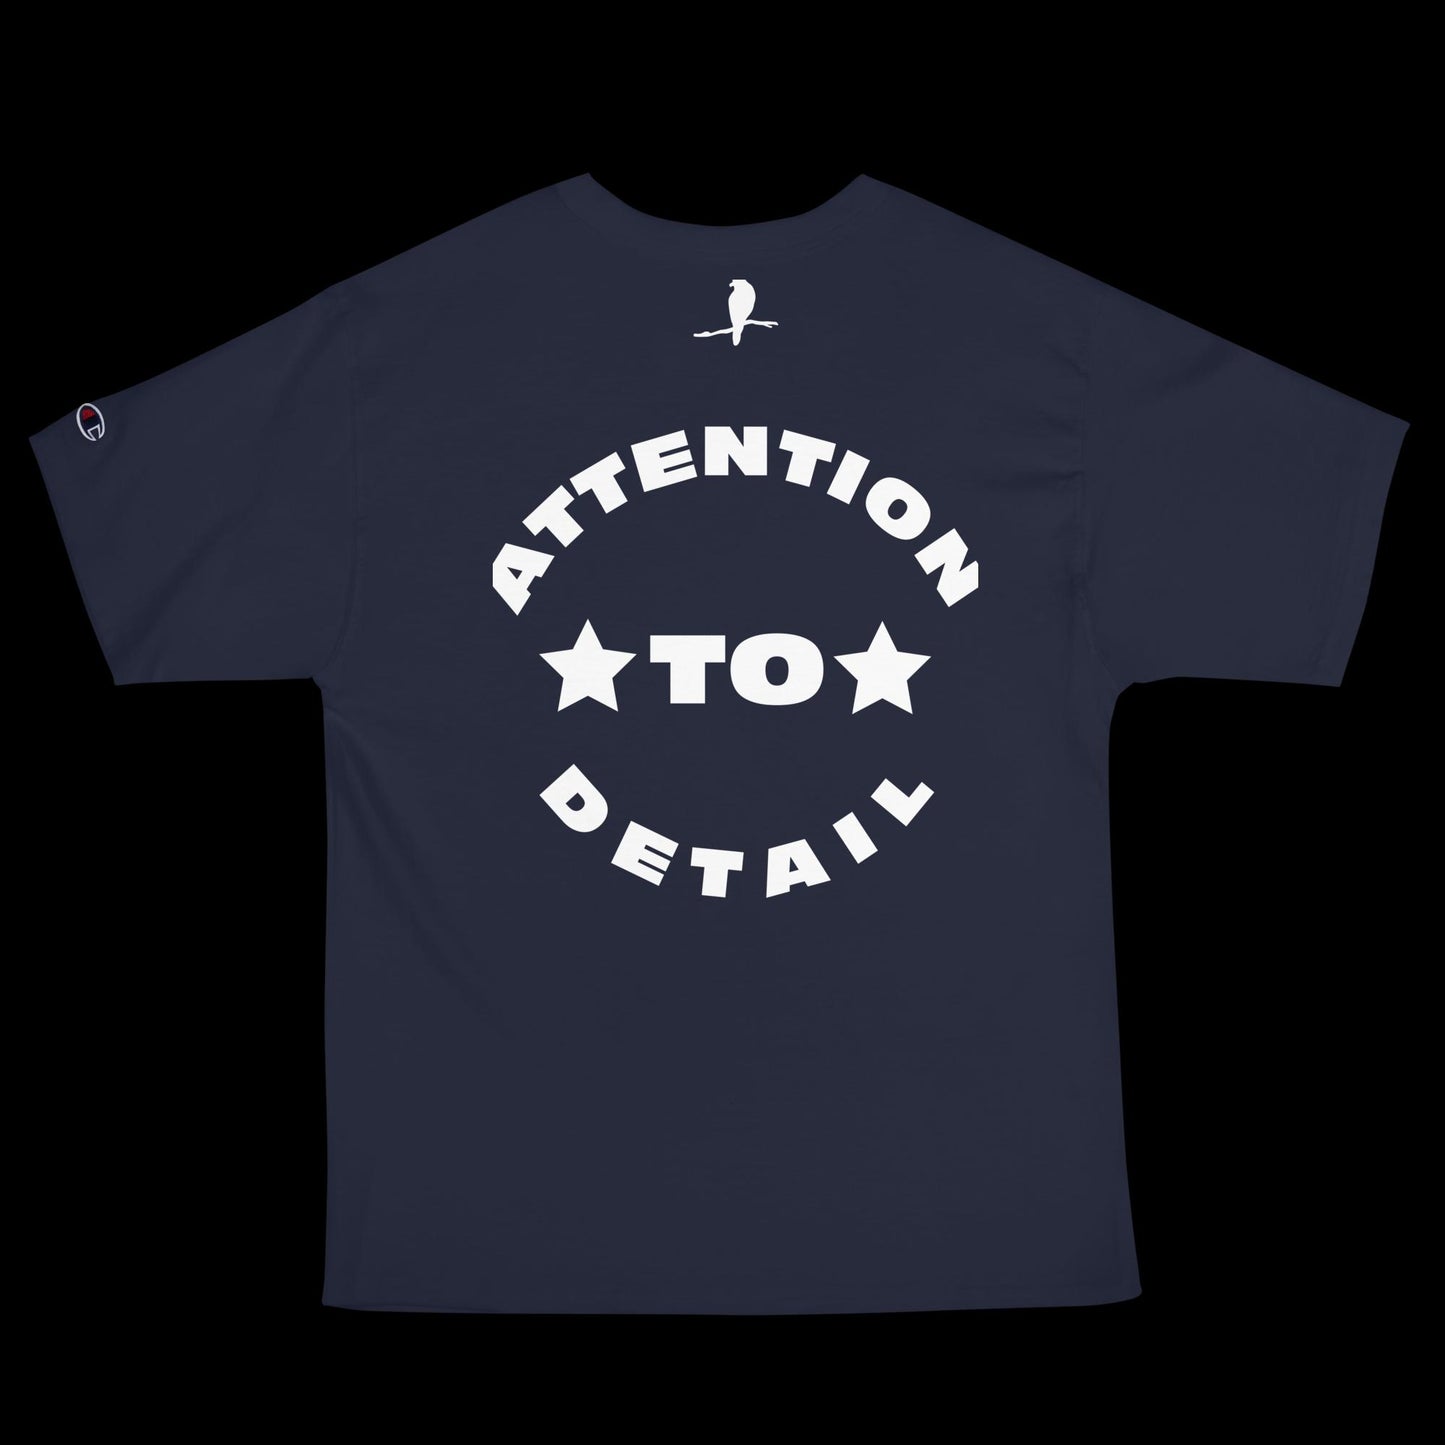 ATD Unisex Champion T-Shirt